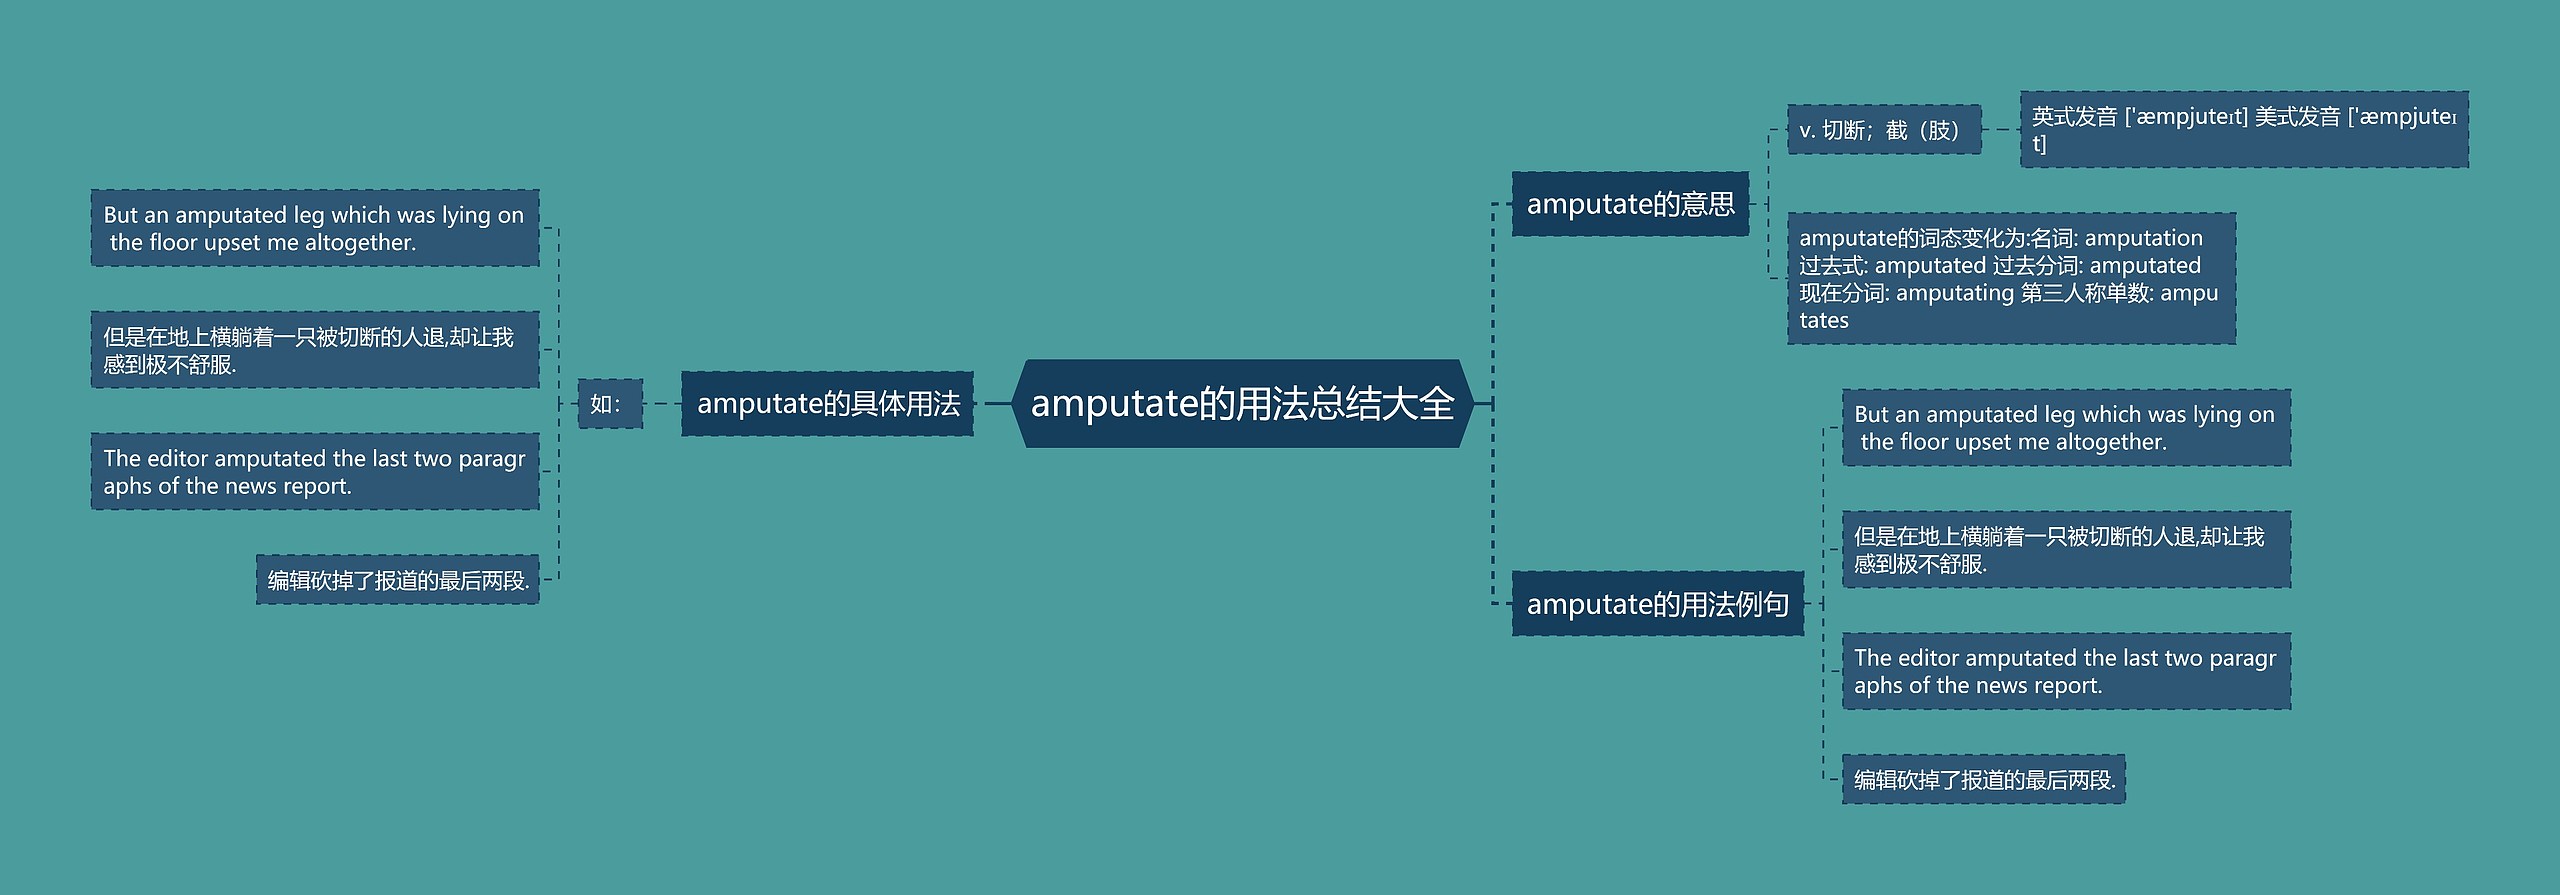 amputate的用法总结大全思维导图